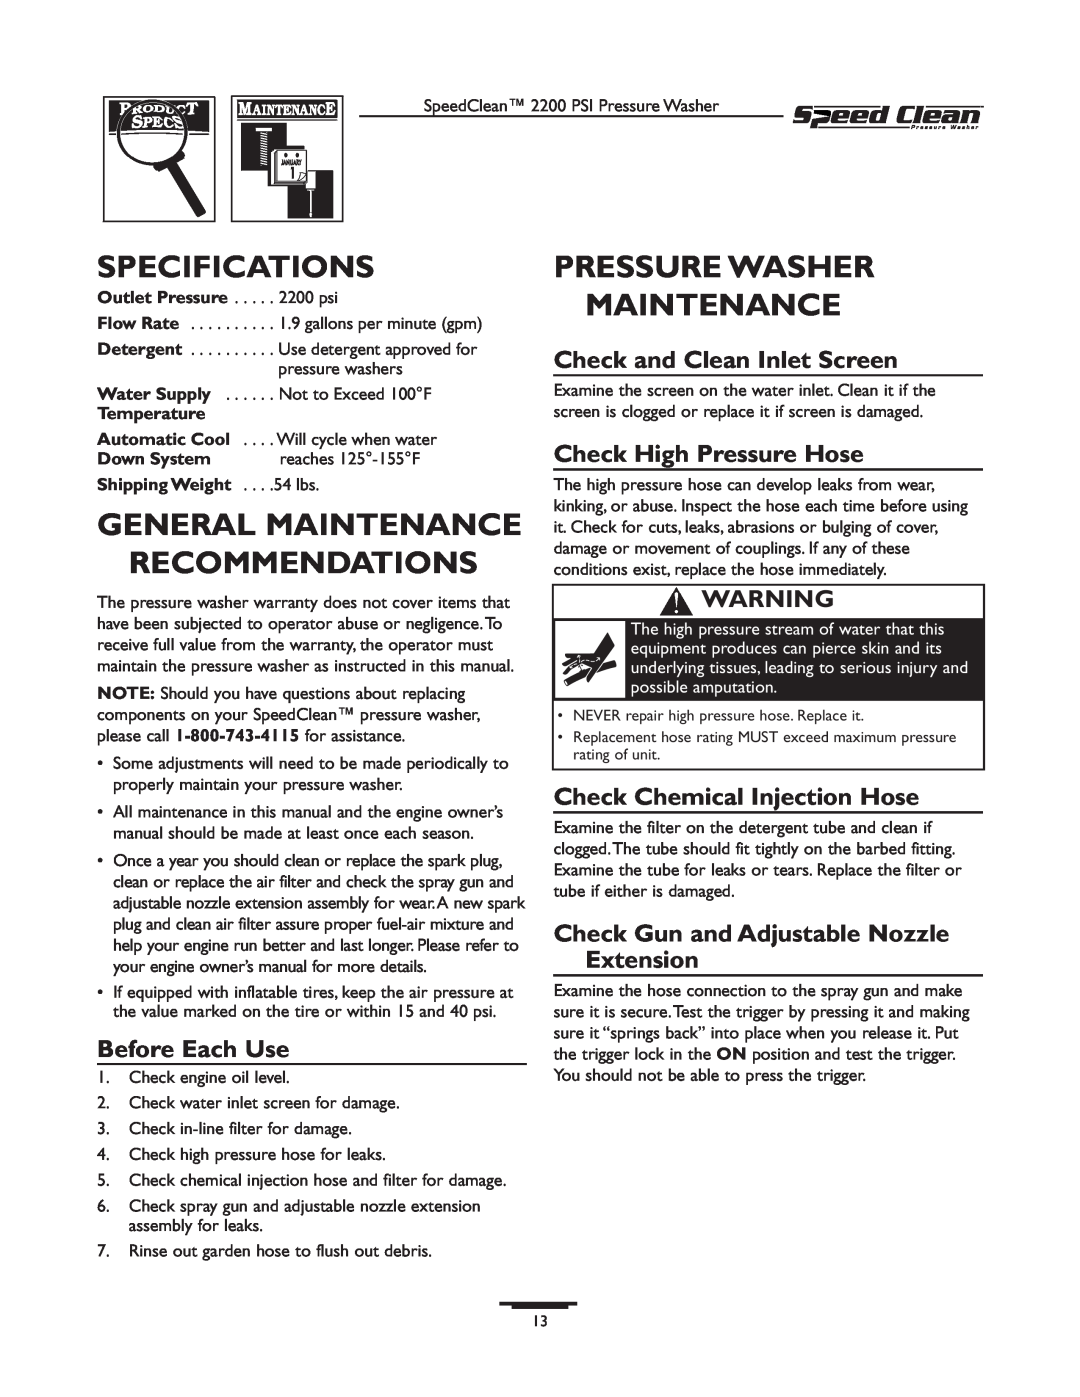 Briggs & Stratton 020239-0 Specifications, General Maintenance Recommendations, Pressure Washer Maintenance, Temperature 